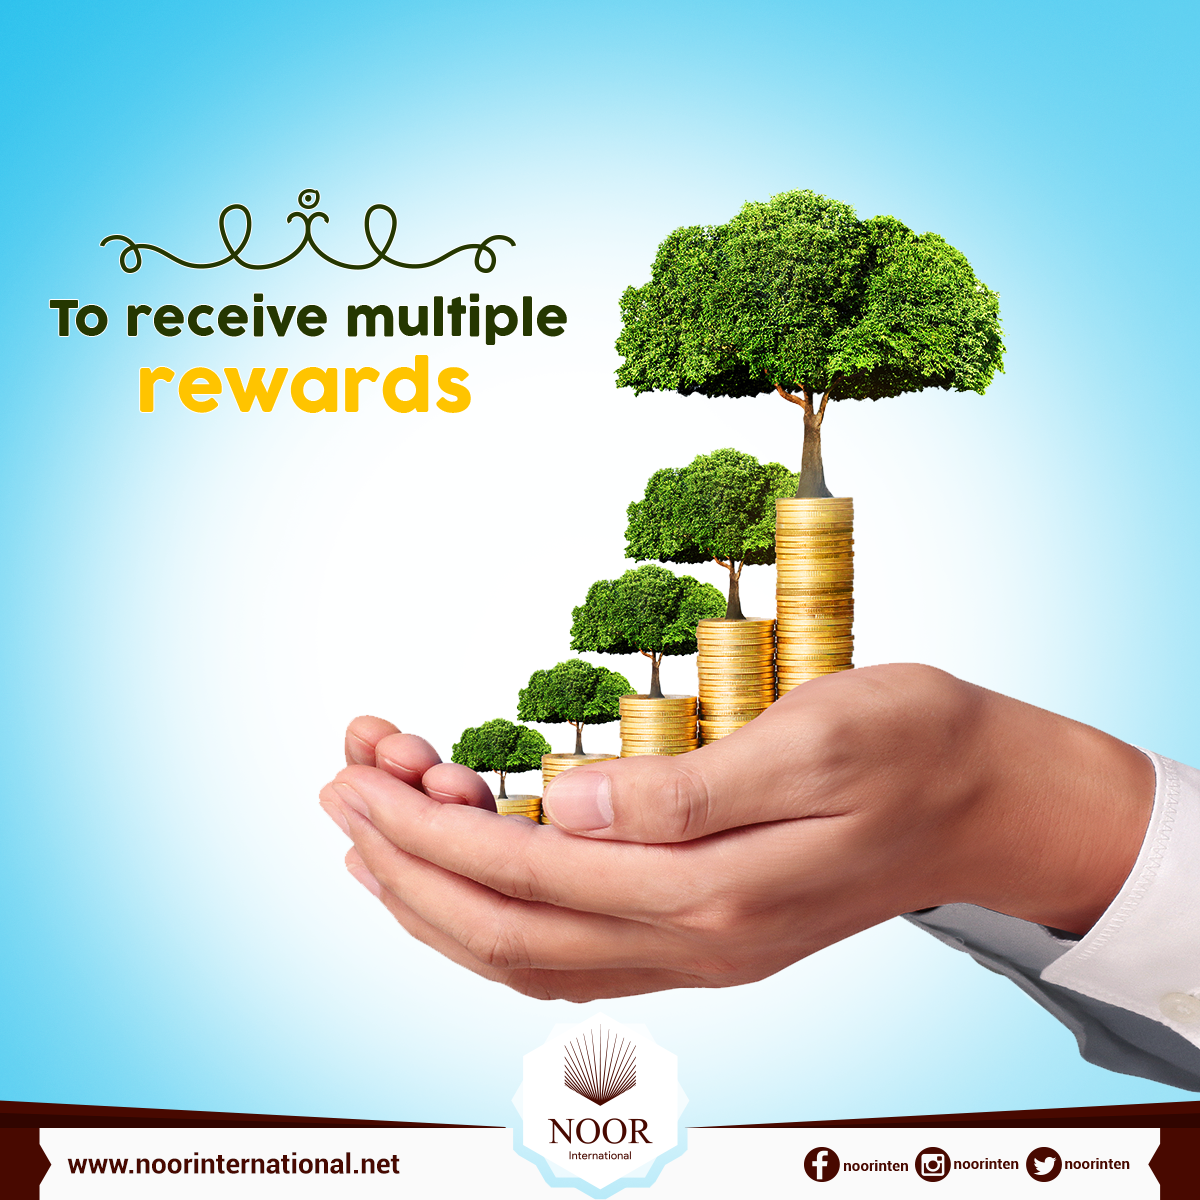 To receive multiple rewards